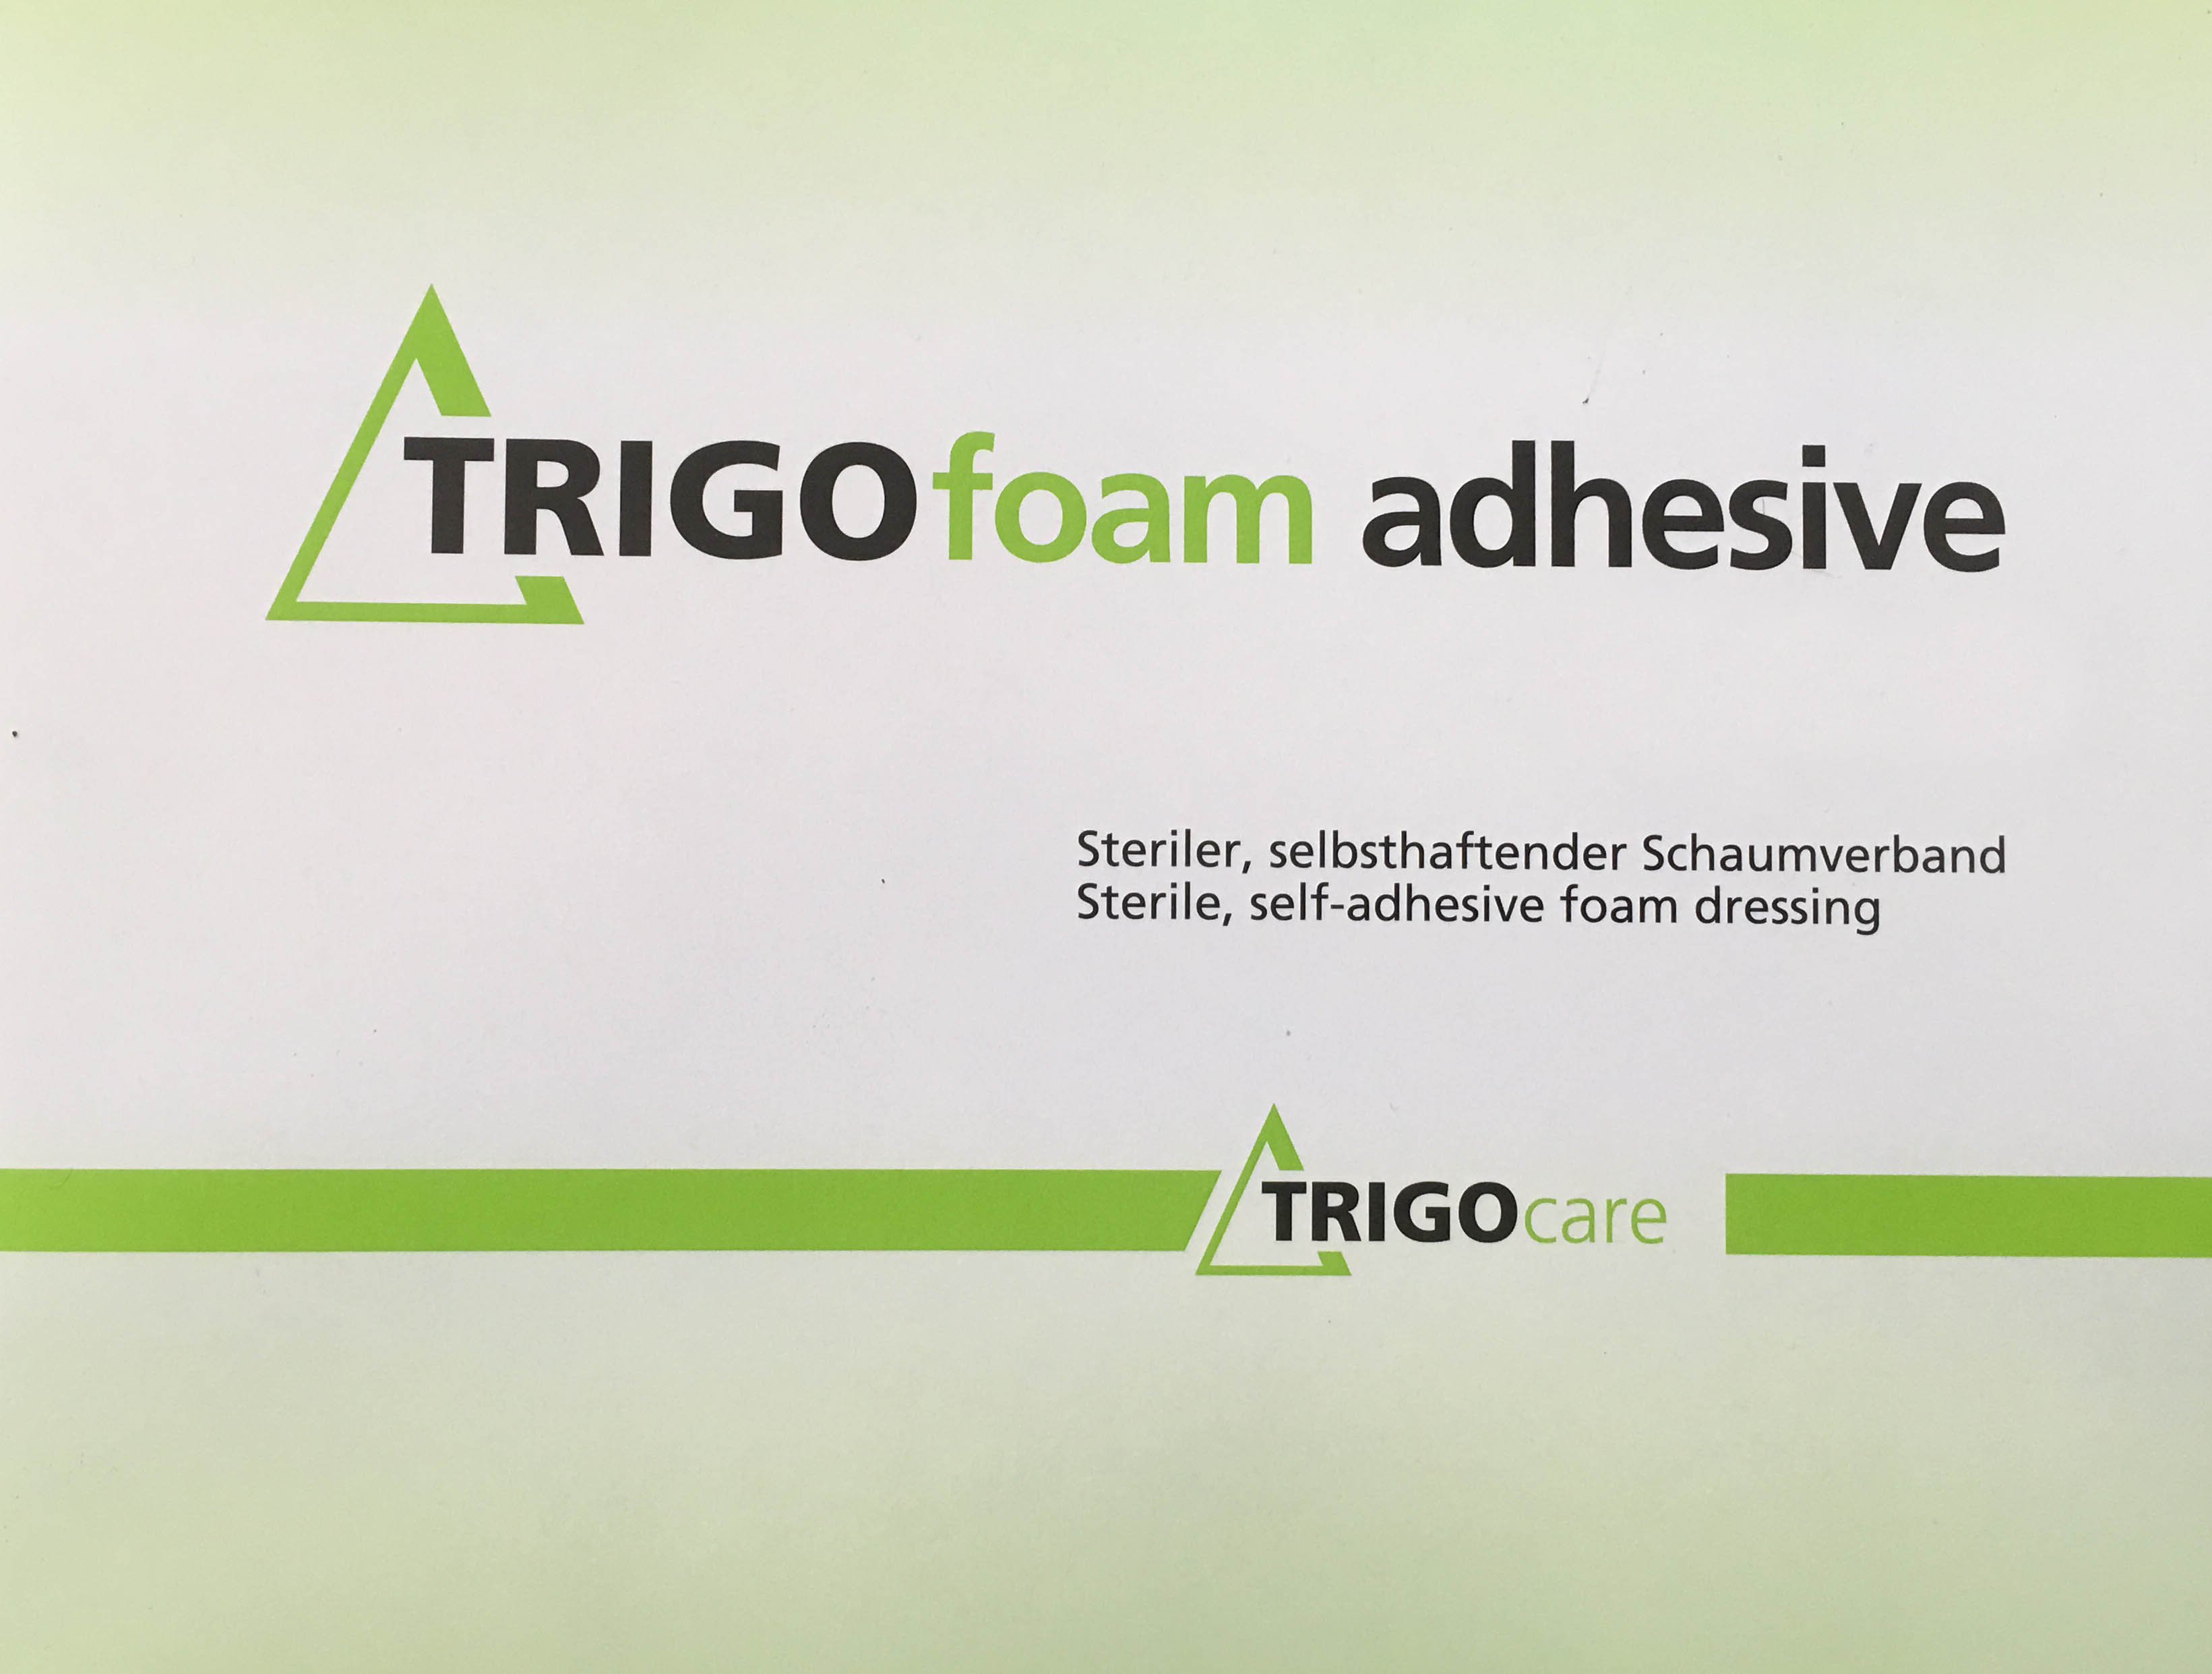 Trigo foam adhesive